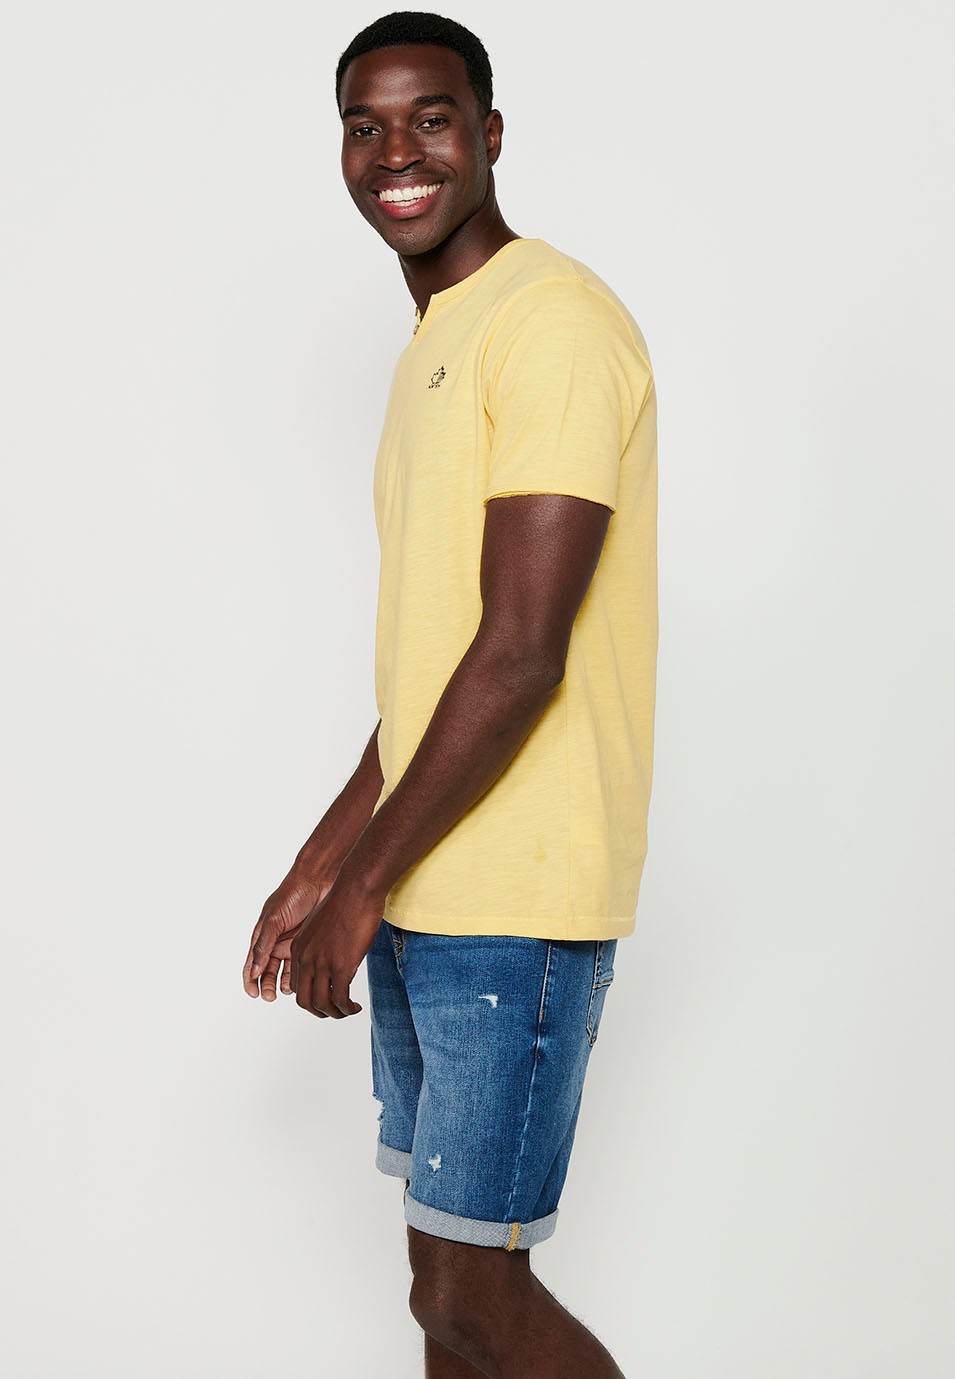 Camiseta básica de manga corta, cuello V con boton, color amarillo para hombre